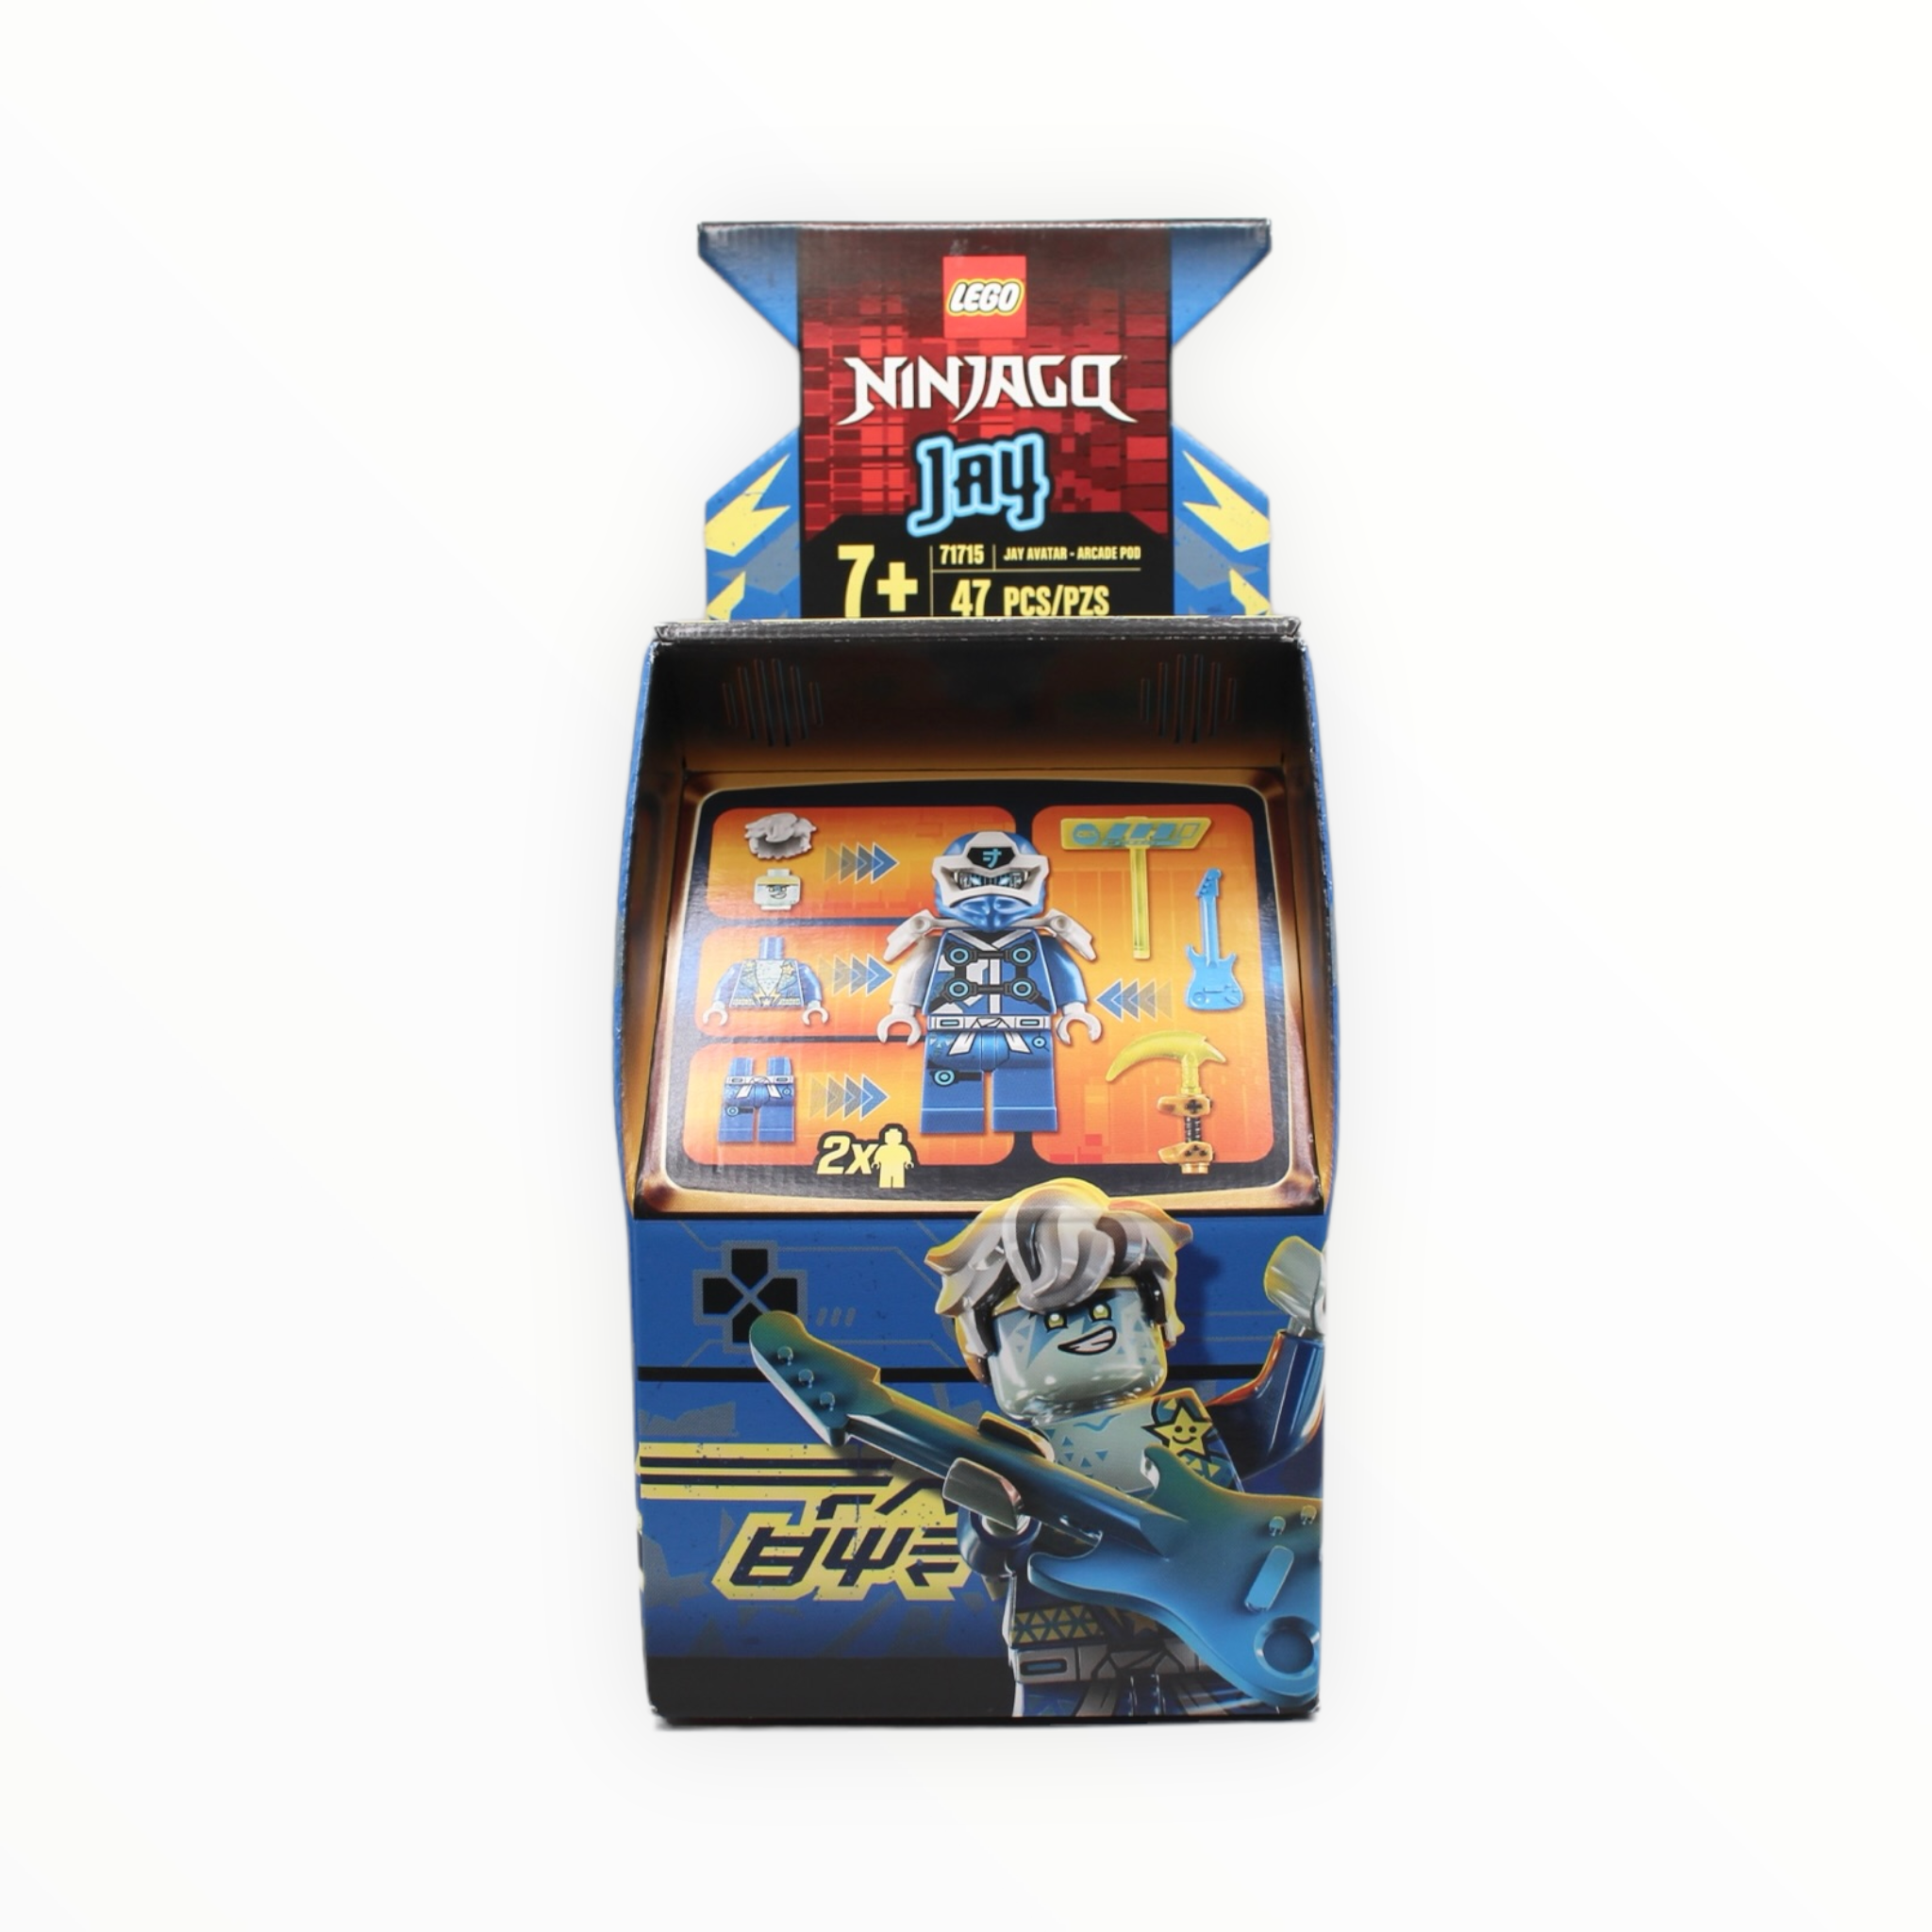 Retired Set 71715 Ninjago Jay Avatar - Arcade Pod